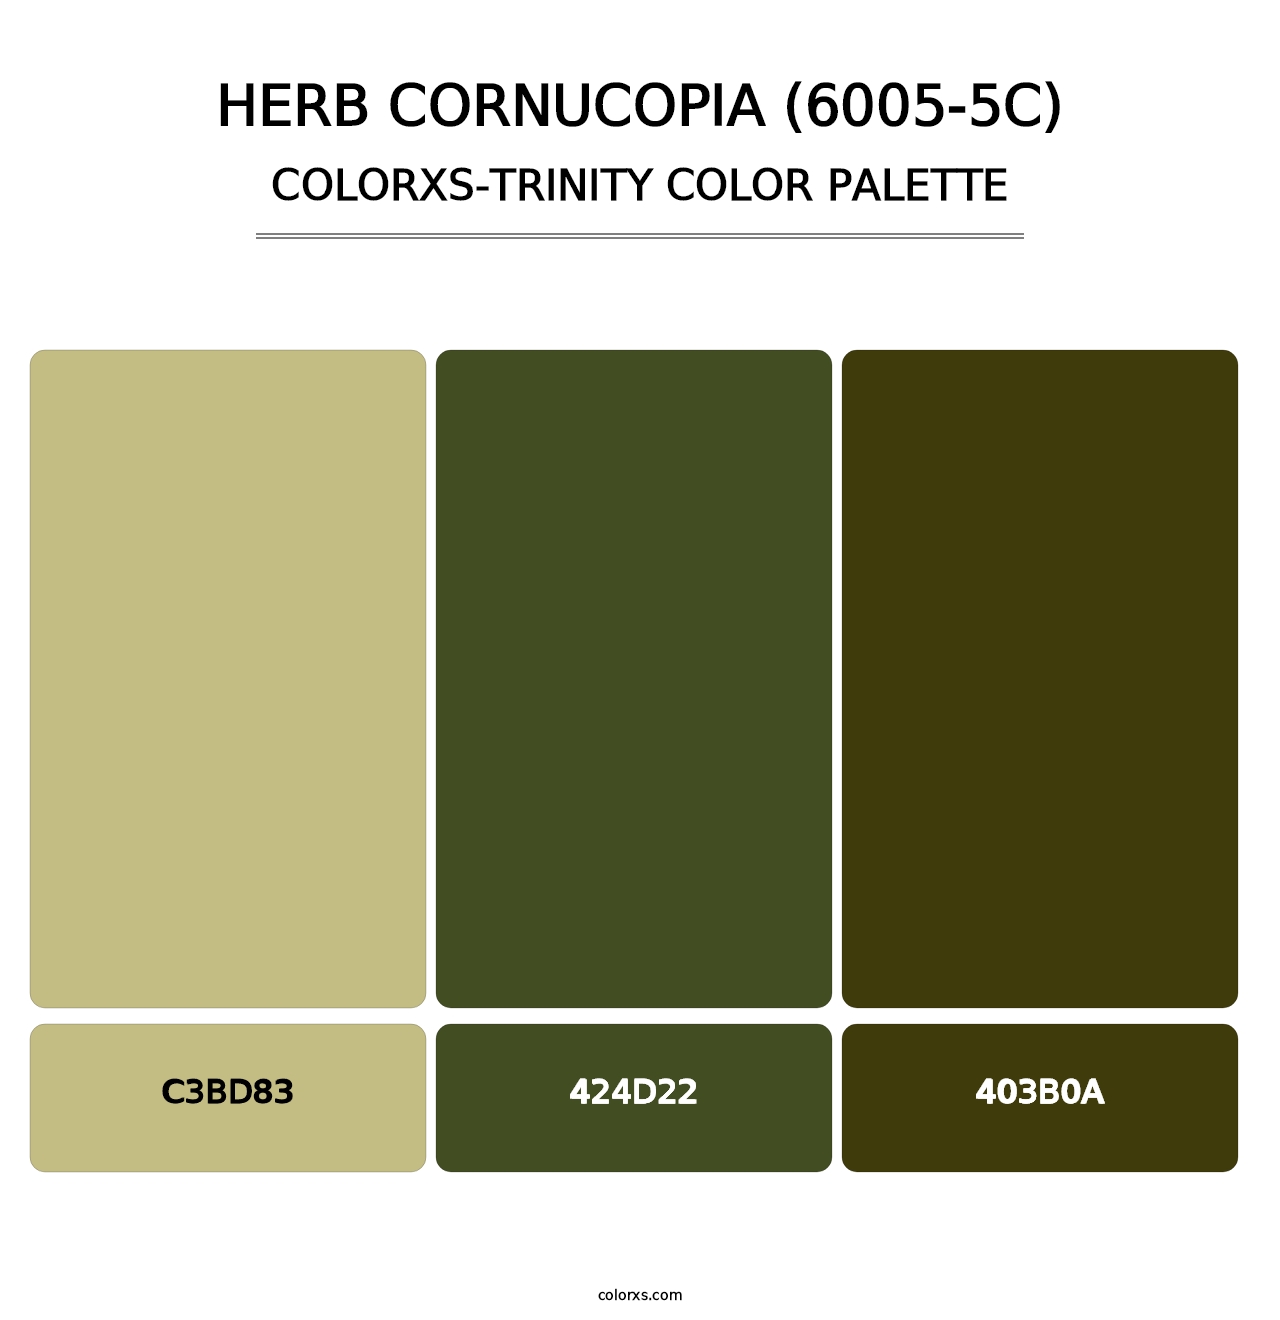 Herb Cornucopia (6005-5C) - Colorxs Trinity Palette